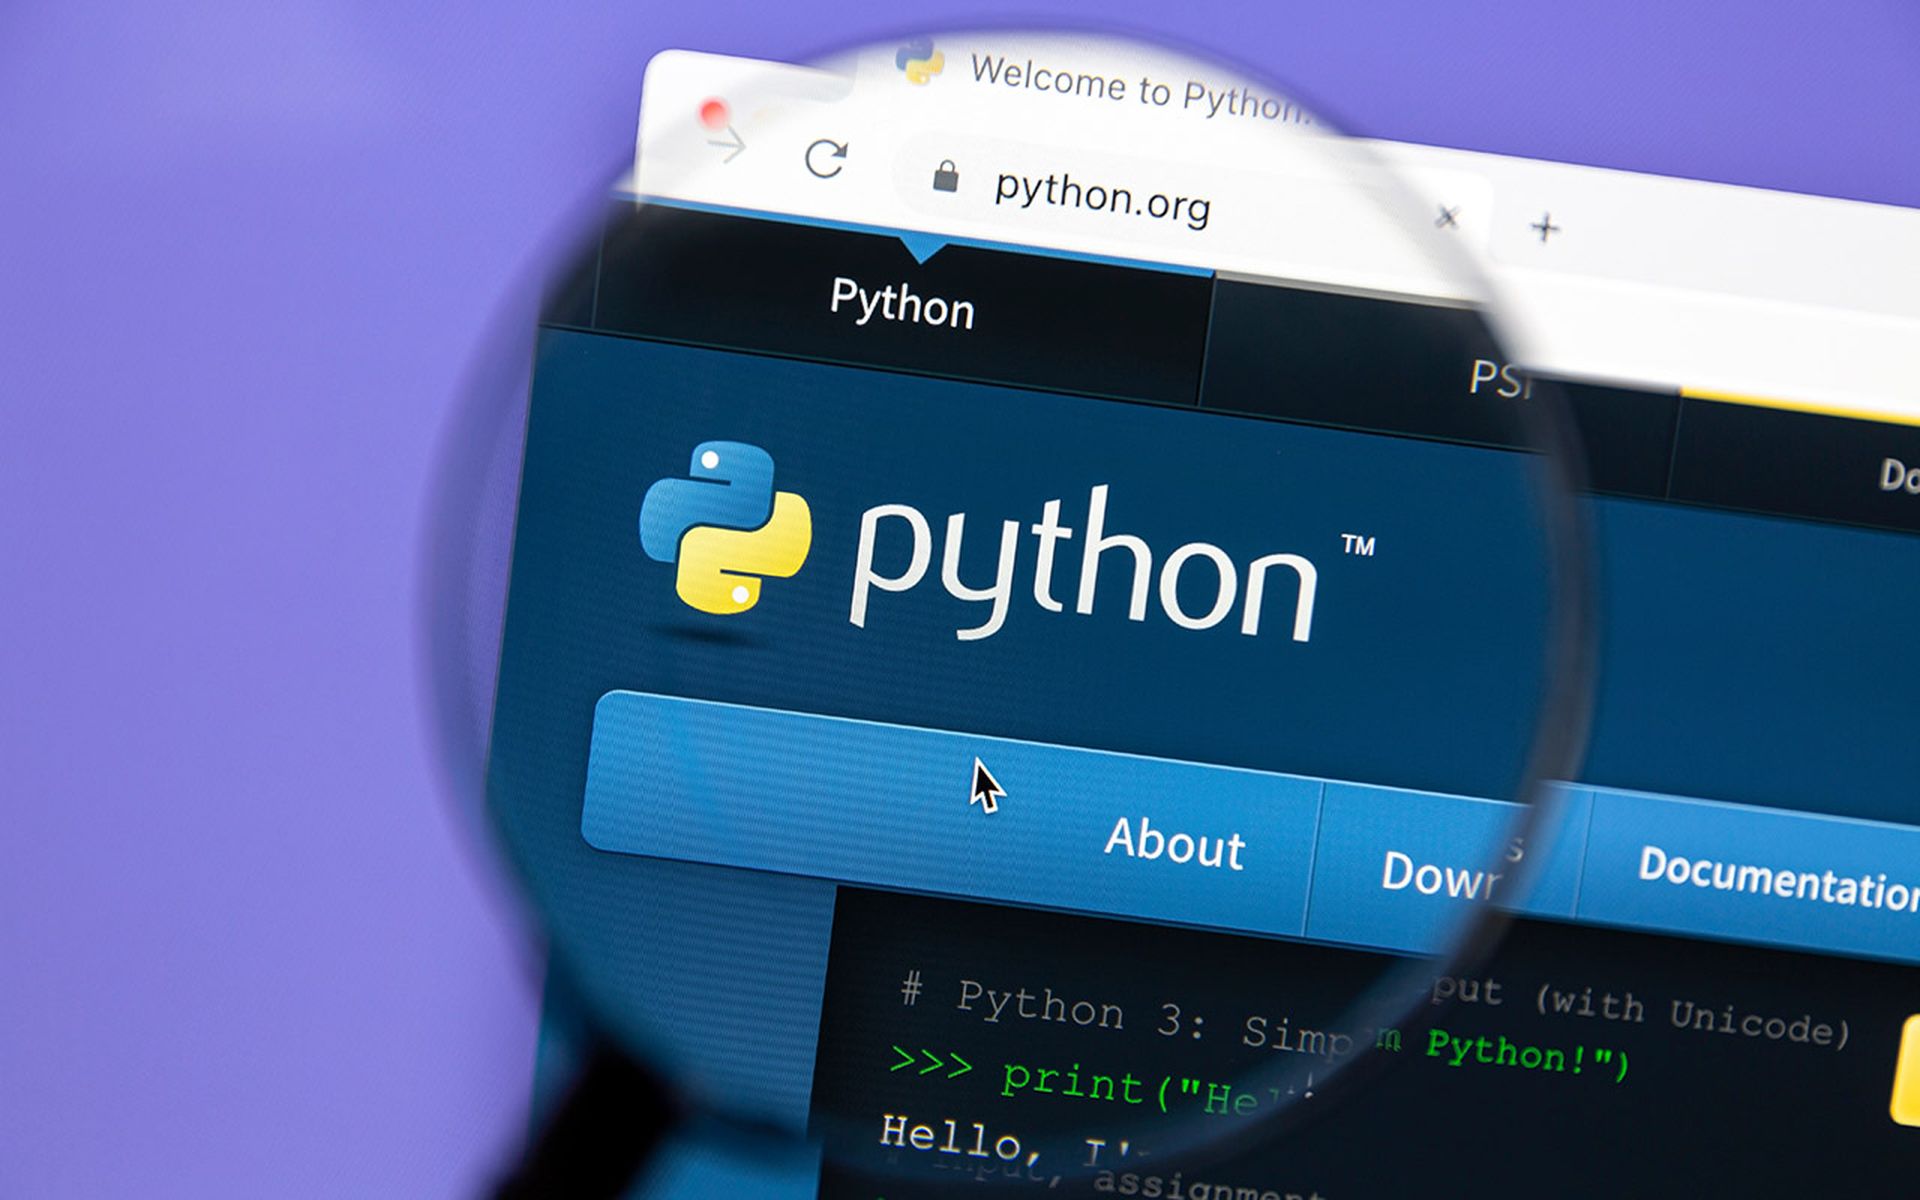 Python website.